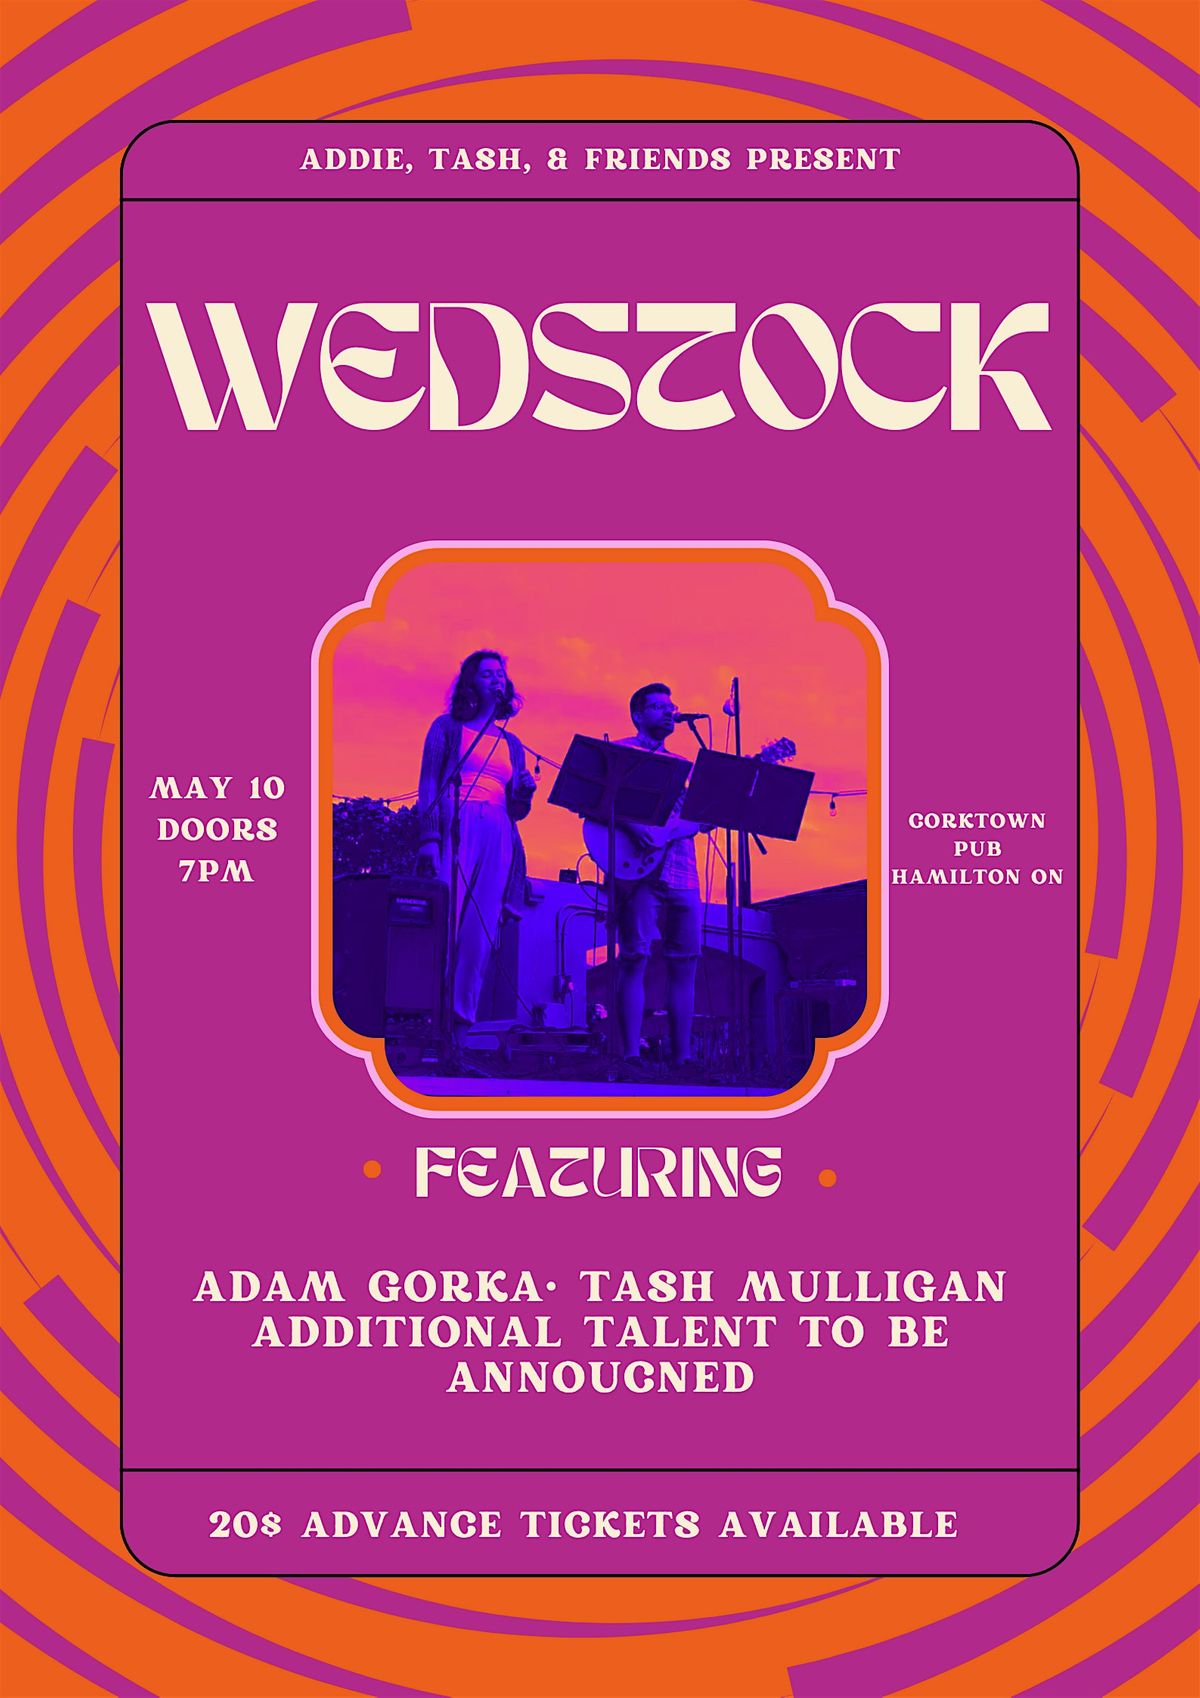 Wedstock - For Adam Gorka and Tash Mulligan